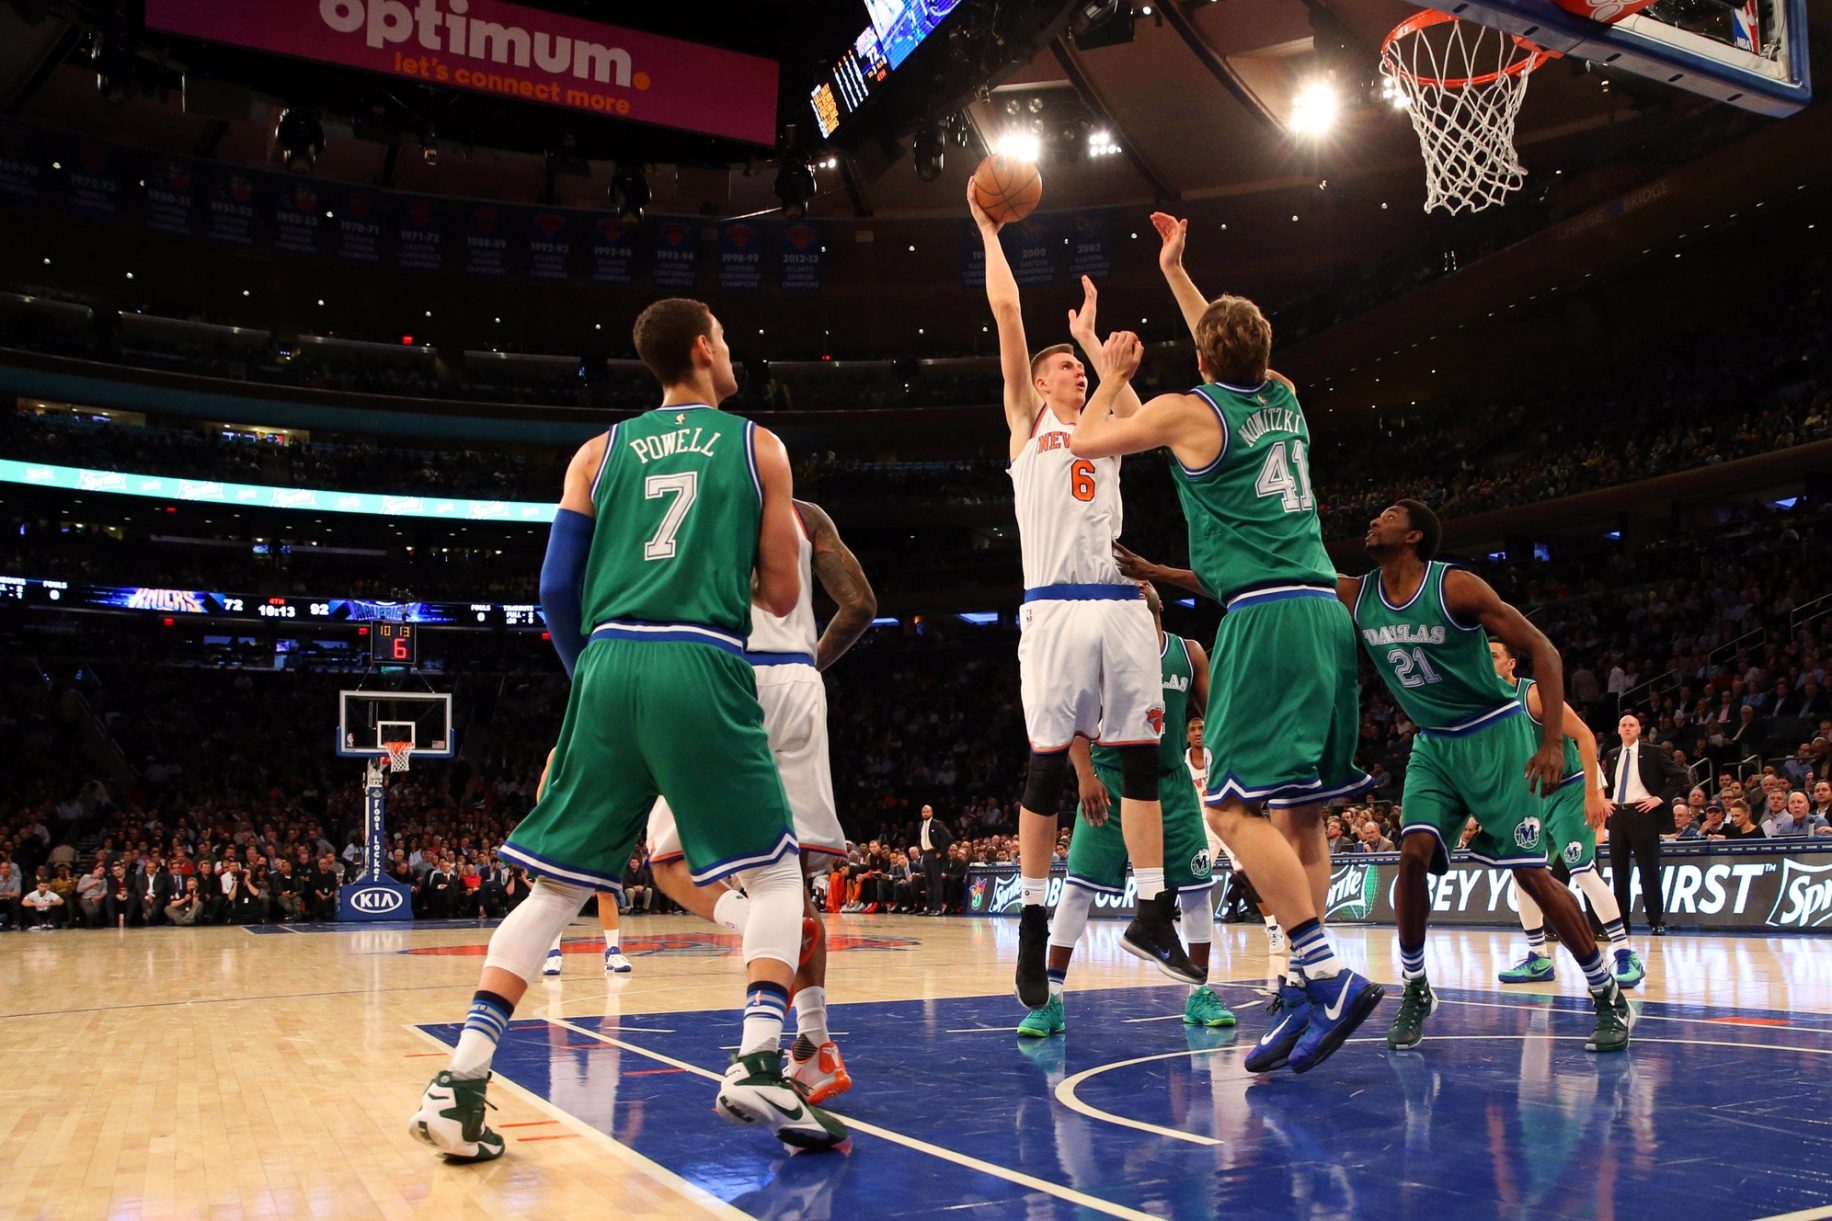 New York Knicks vs. Dallas Mavericks: Kristaps Porzingis and Dirk Nowitzki are both struggling 